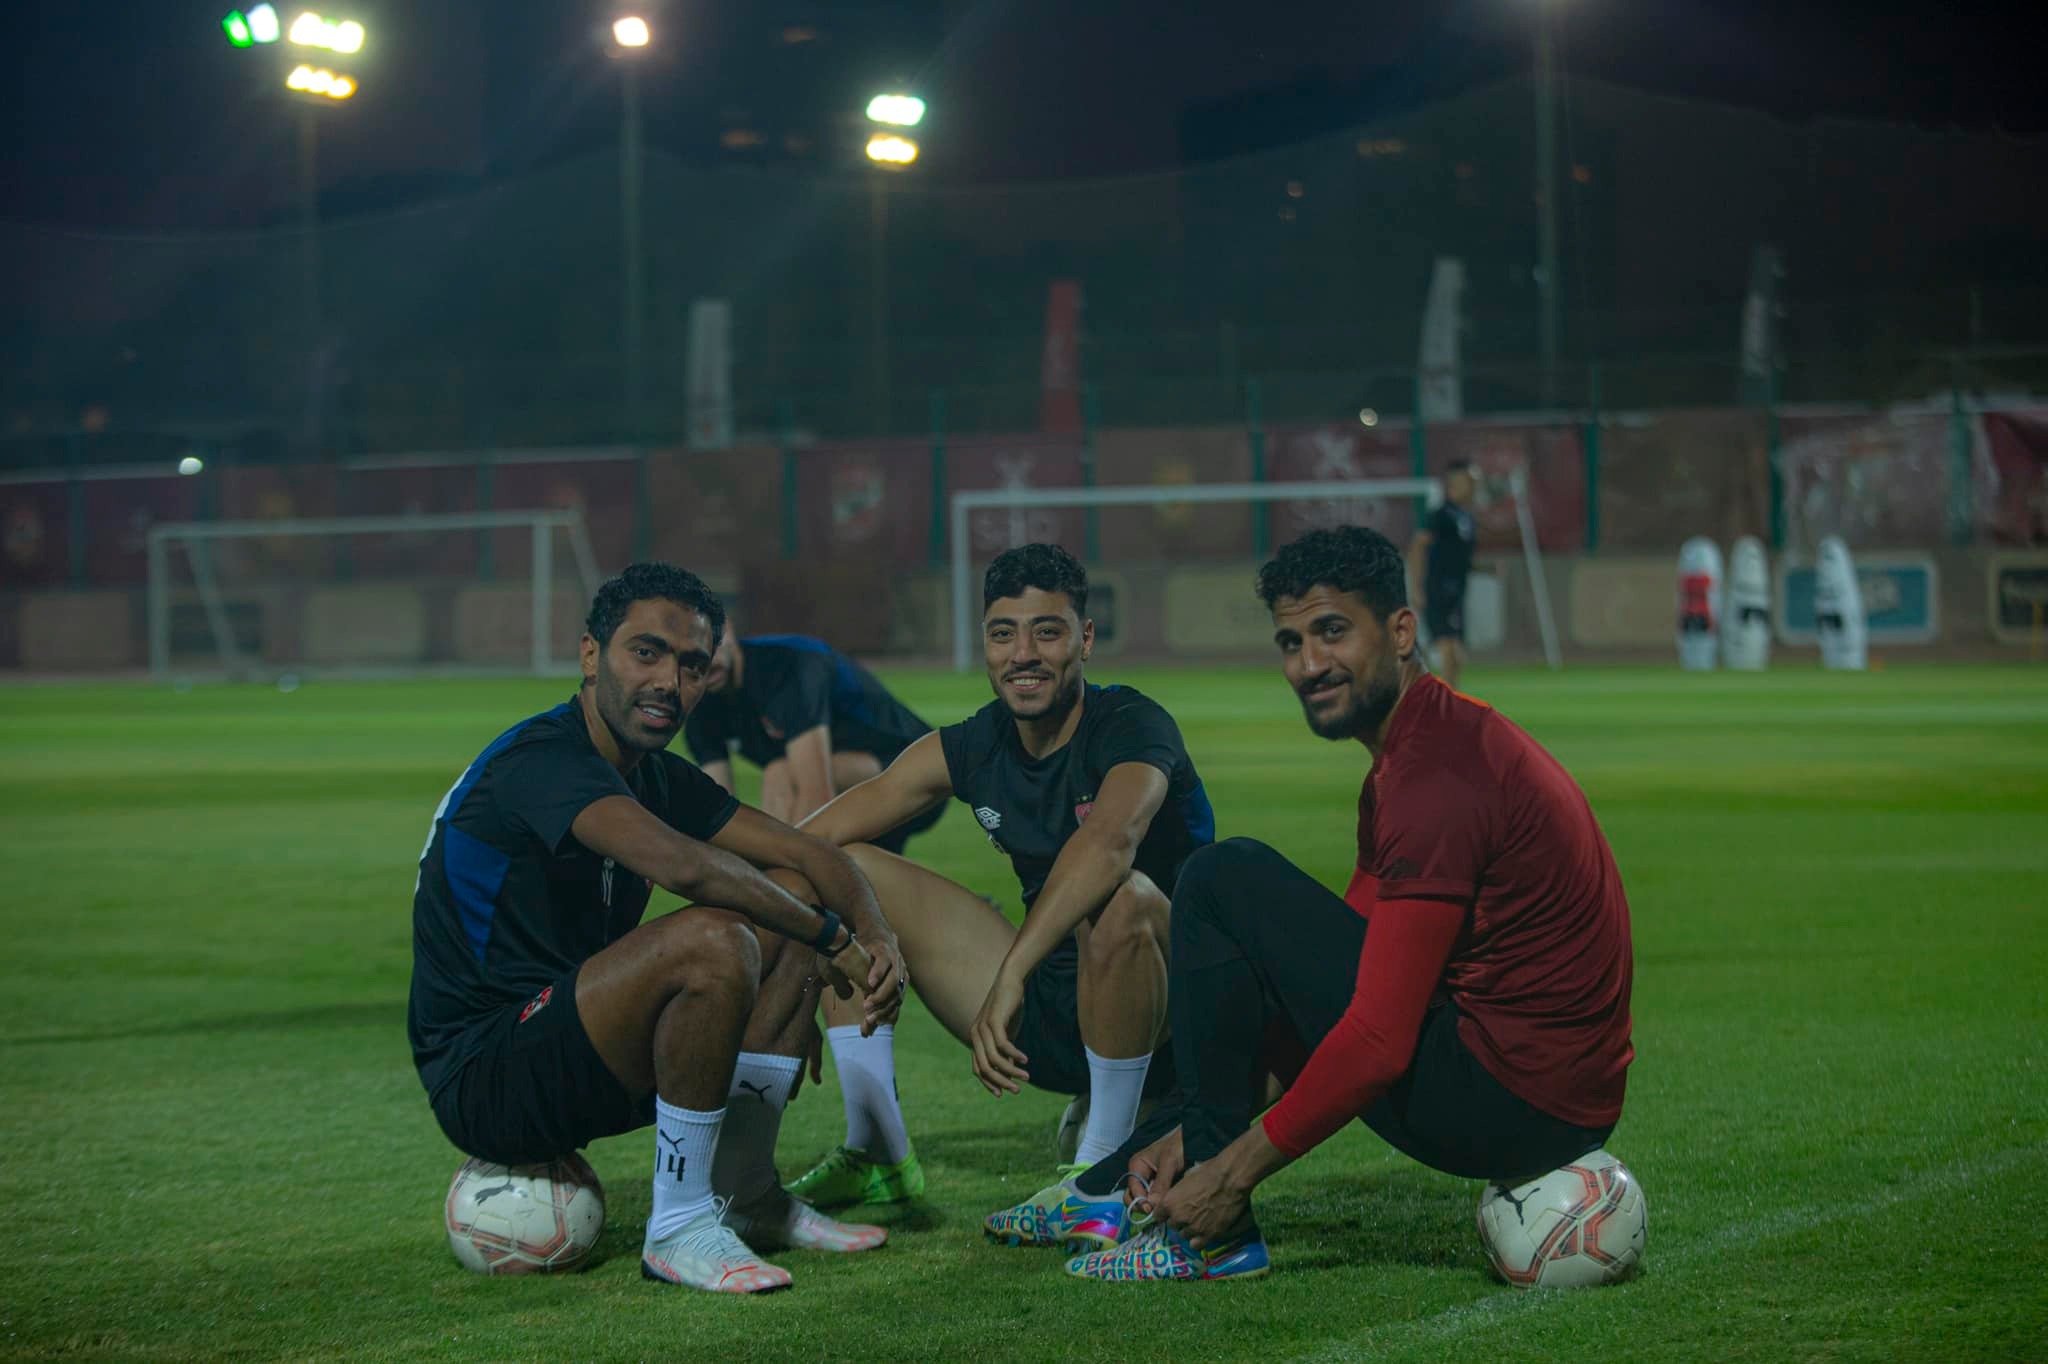 Al-Ahly players